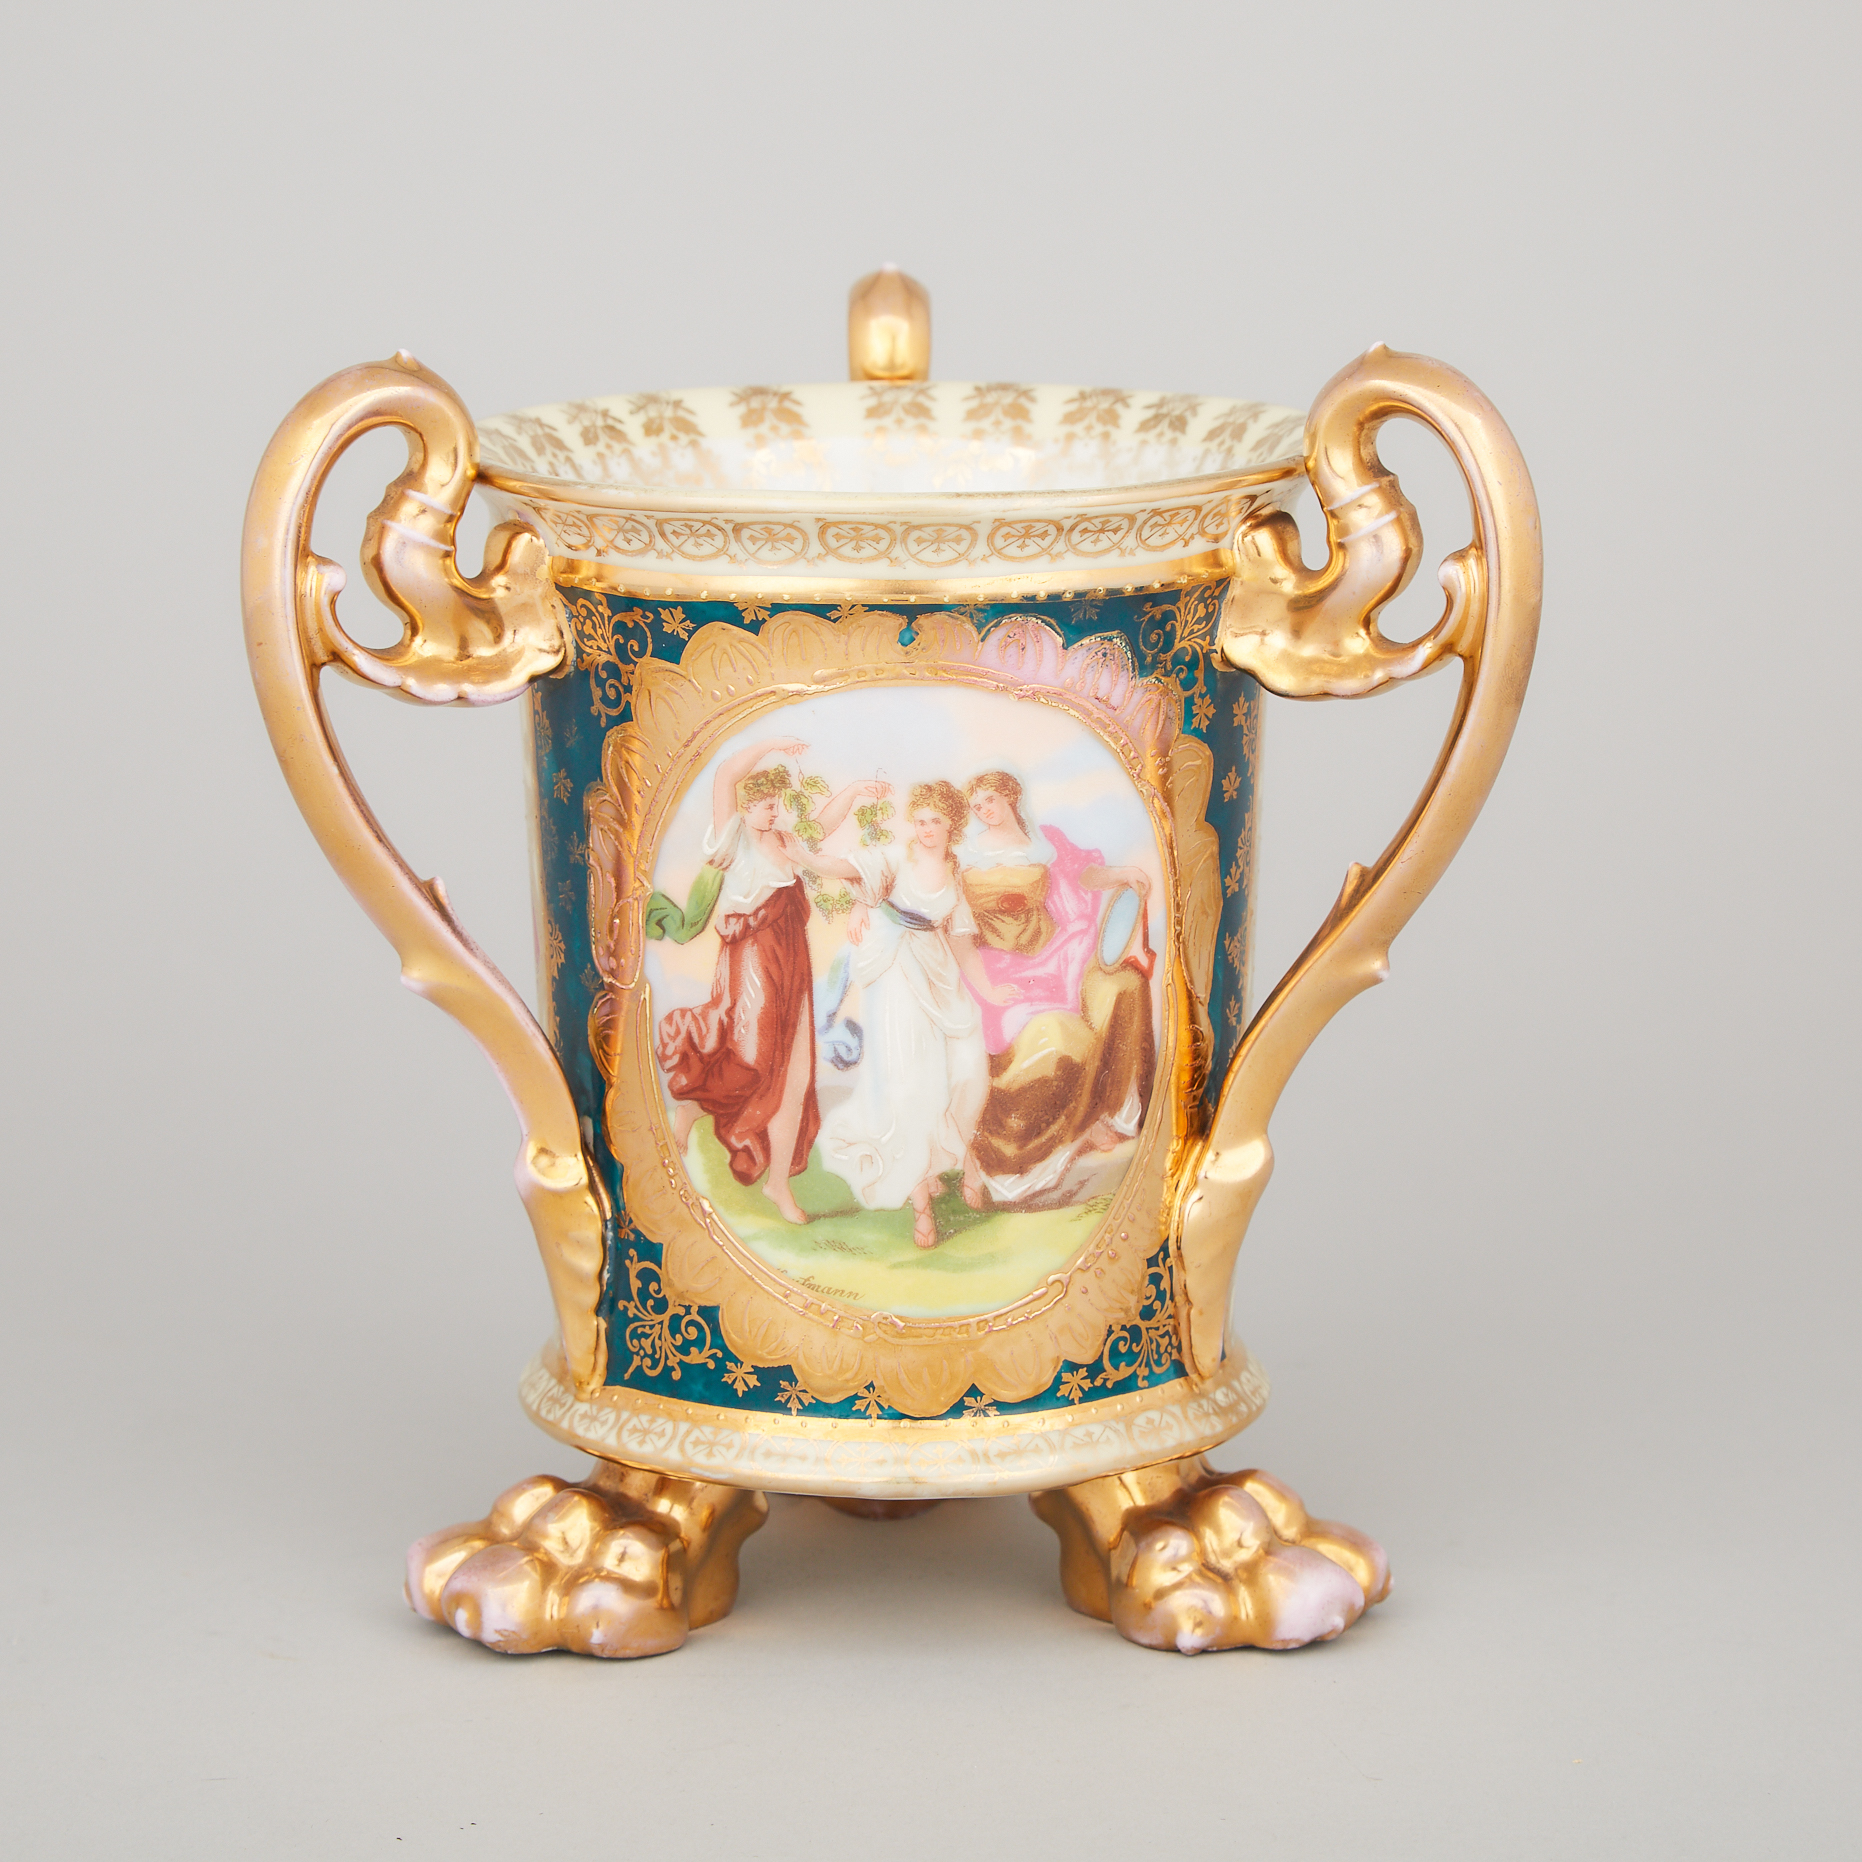 'Vienna' Tyg or Three-Handled Loving Cup, late 19th century